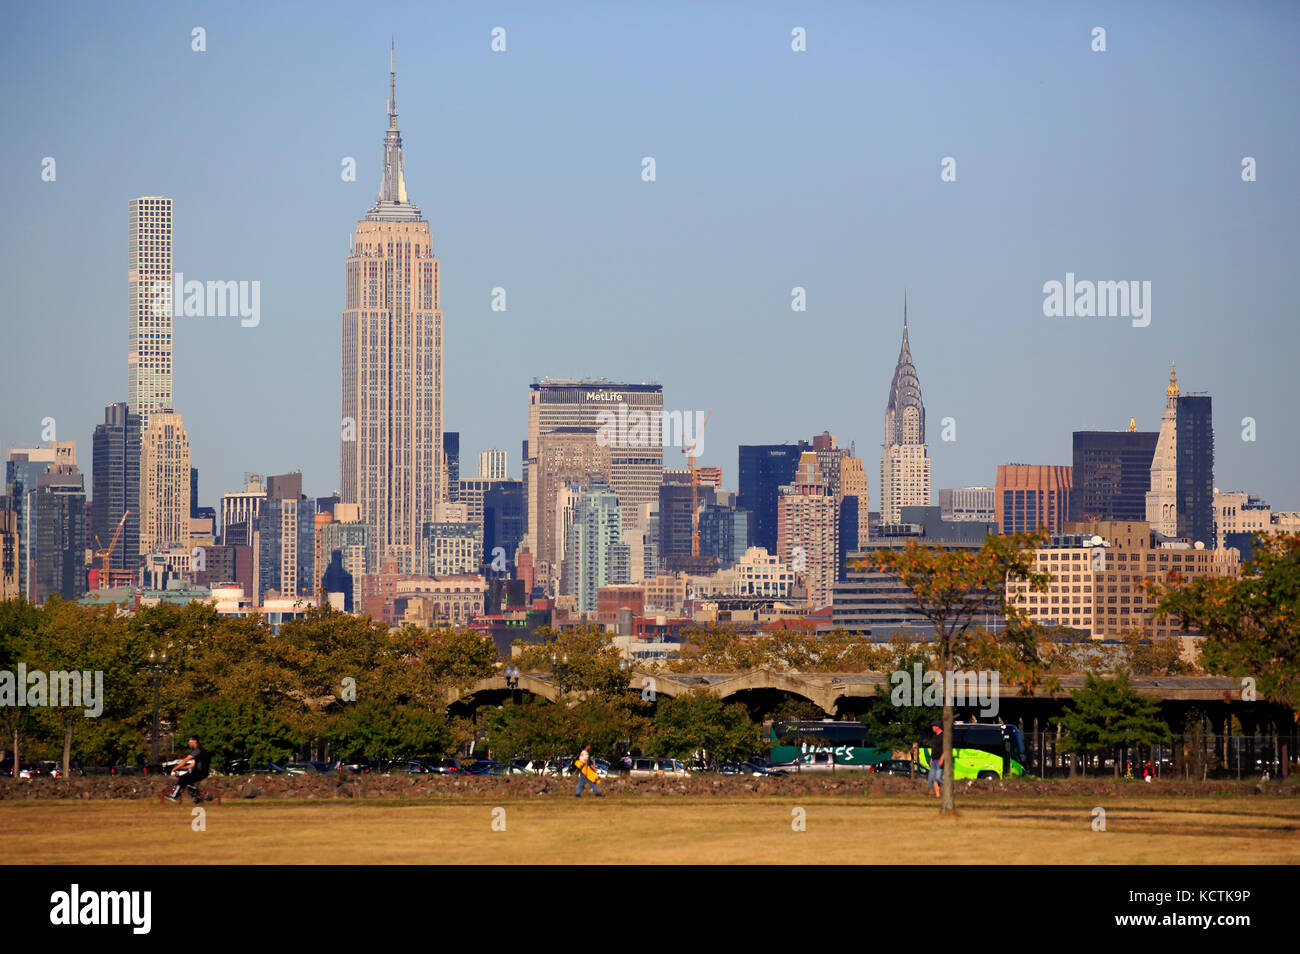 Vista di Manhattan con 432 Park Ave Tower, Empire State Building e Chrysler Building da Liberty State Park nel New Jersey.USA Foto Stock